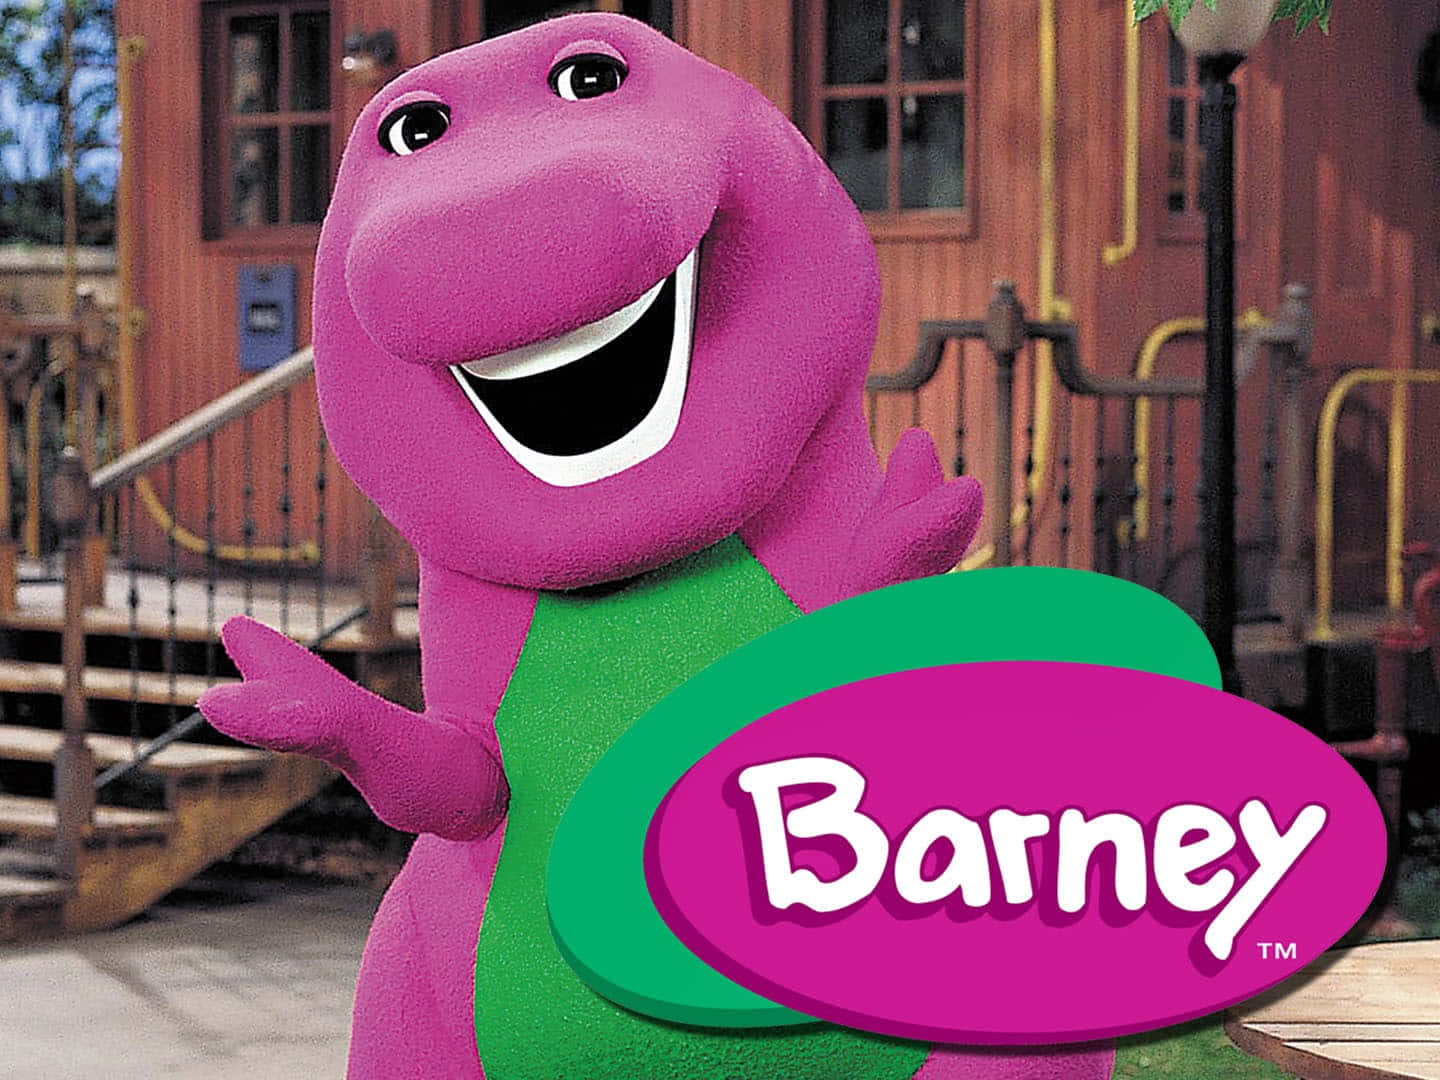 "Barney - Bringing Joy to Kids Everywhere!"